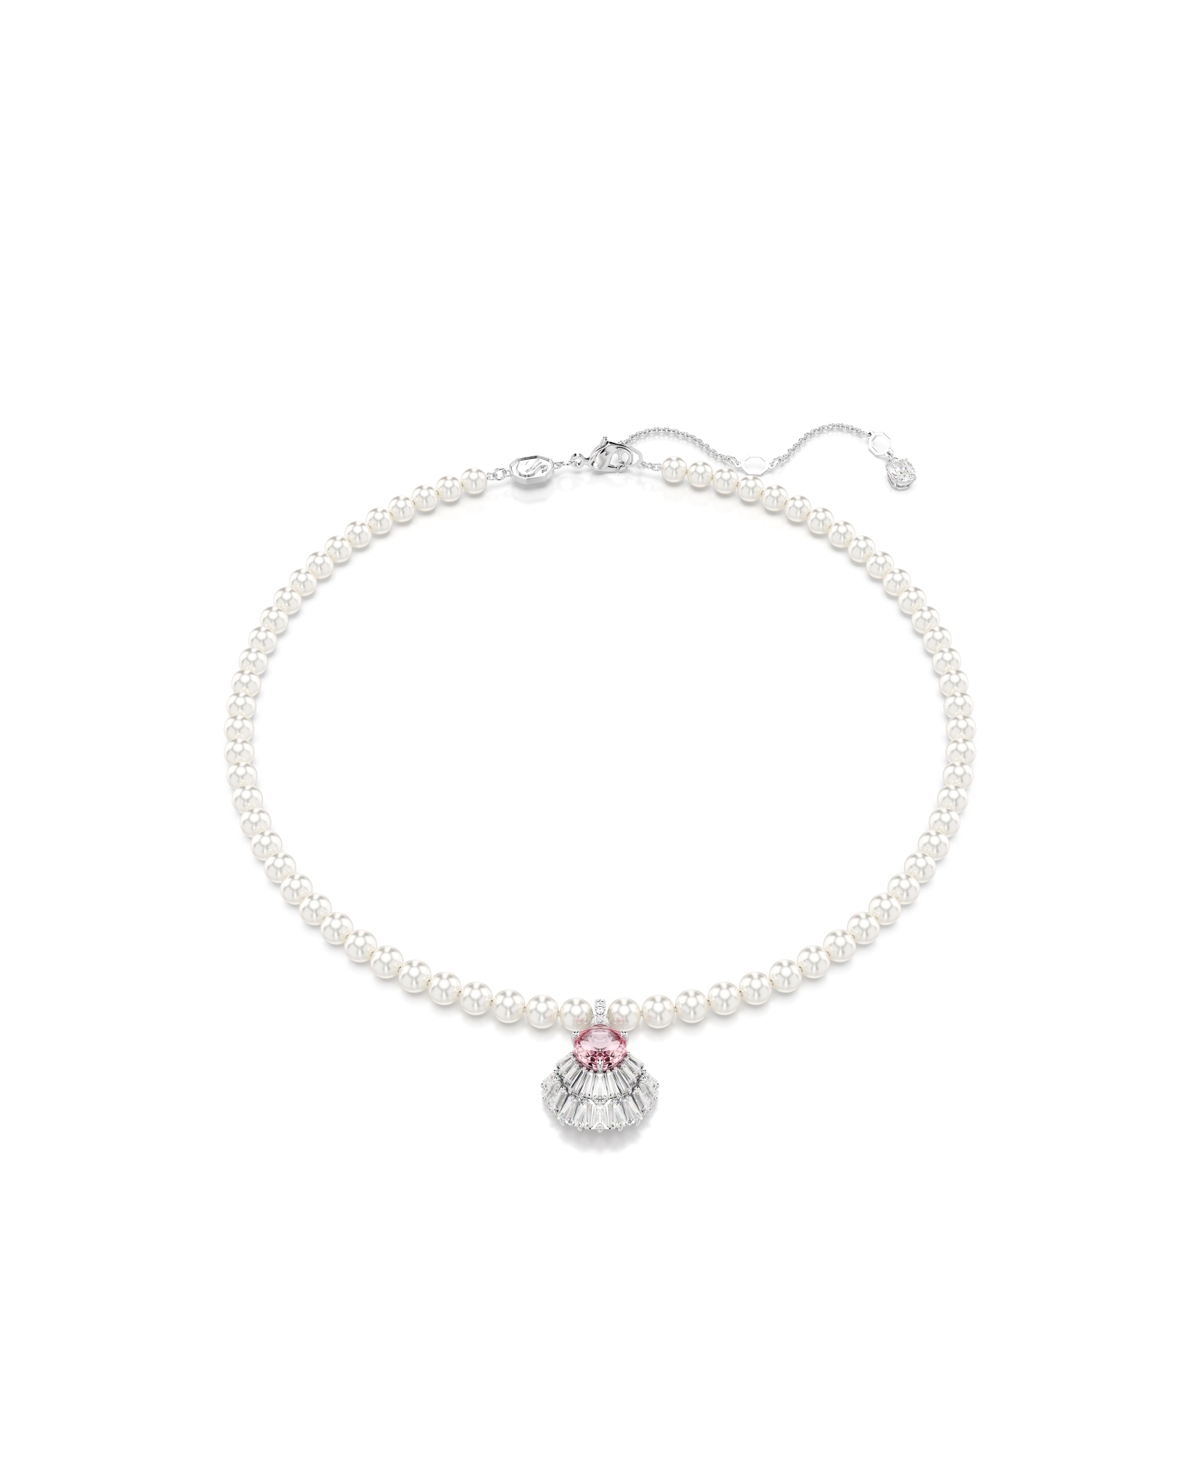 Mixed Cuts, Crystal Swarovski Imitation Pearls, Shell, Pink, Rhodium Plated Idyllia Pendant Necklace - Pink